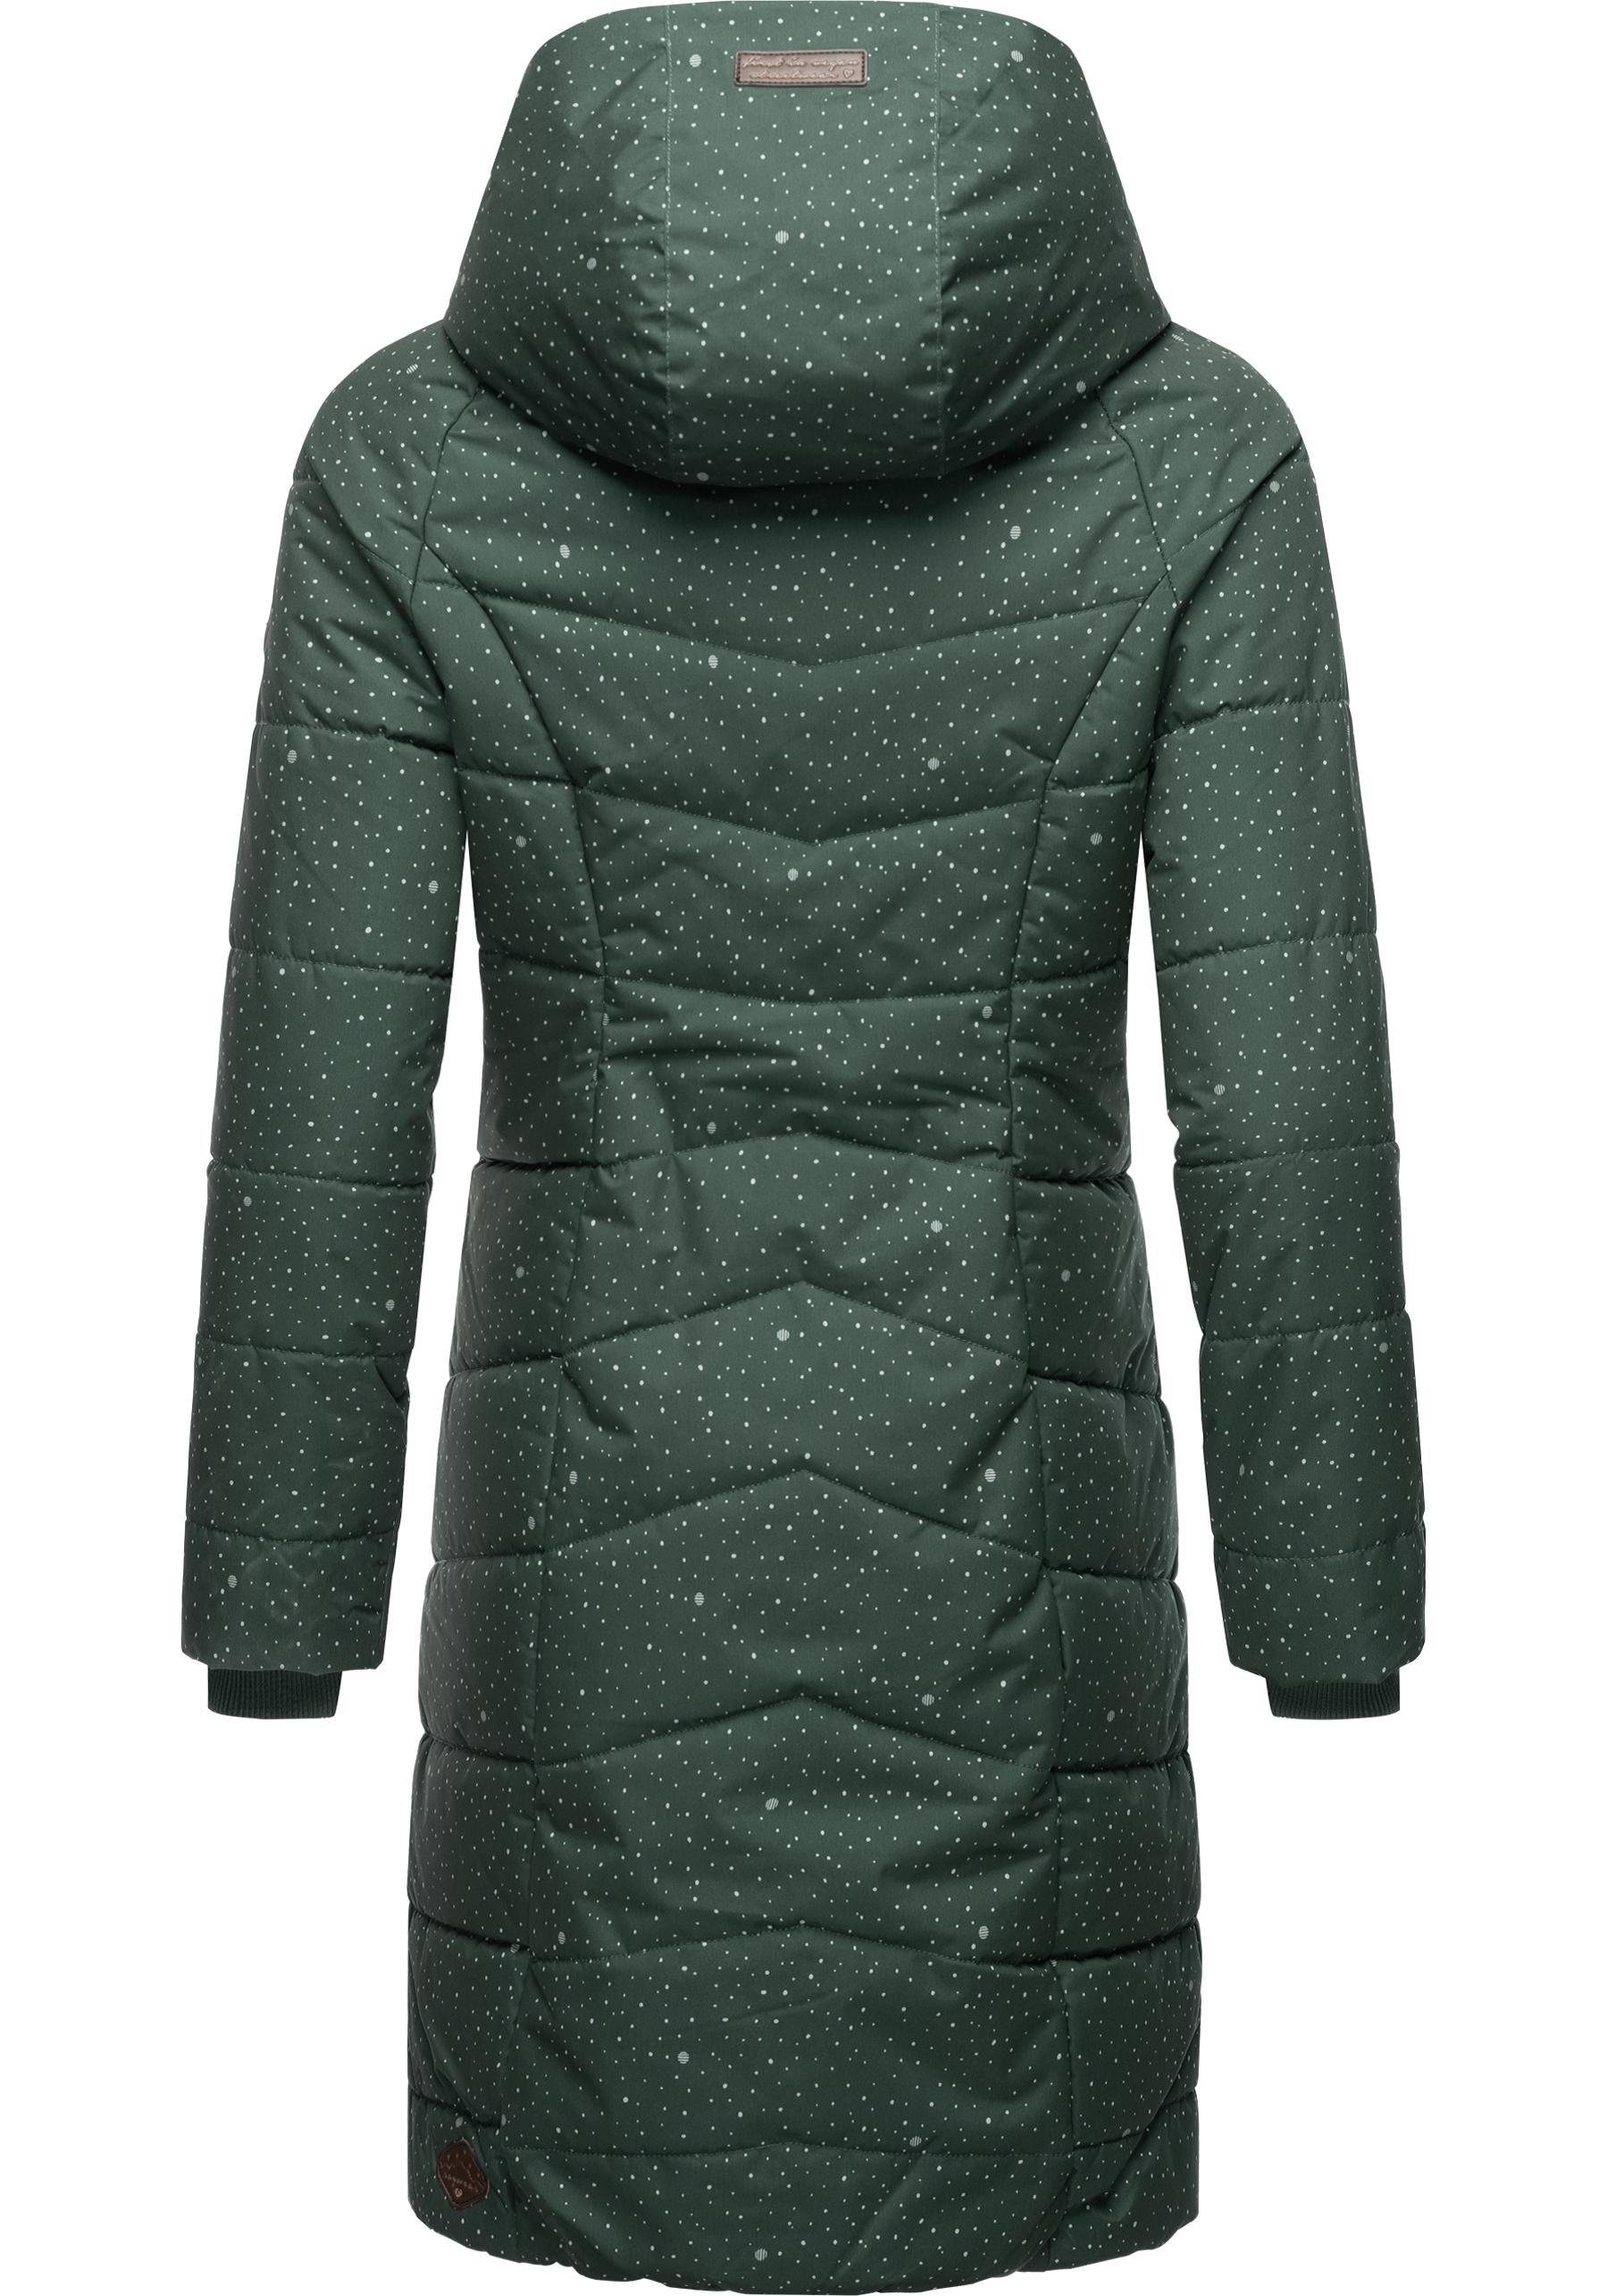 Winterparka gesteppter dunkelgrün stylischer, Dizzie Print Kapuze Steppmantel mit Coat Ragwear